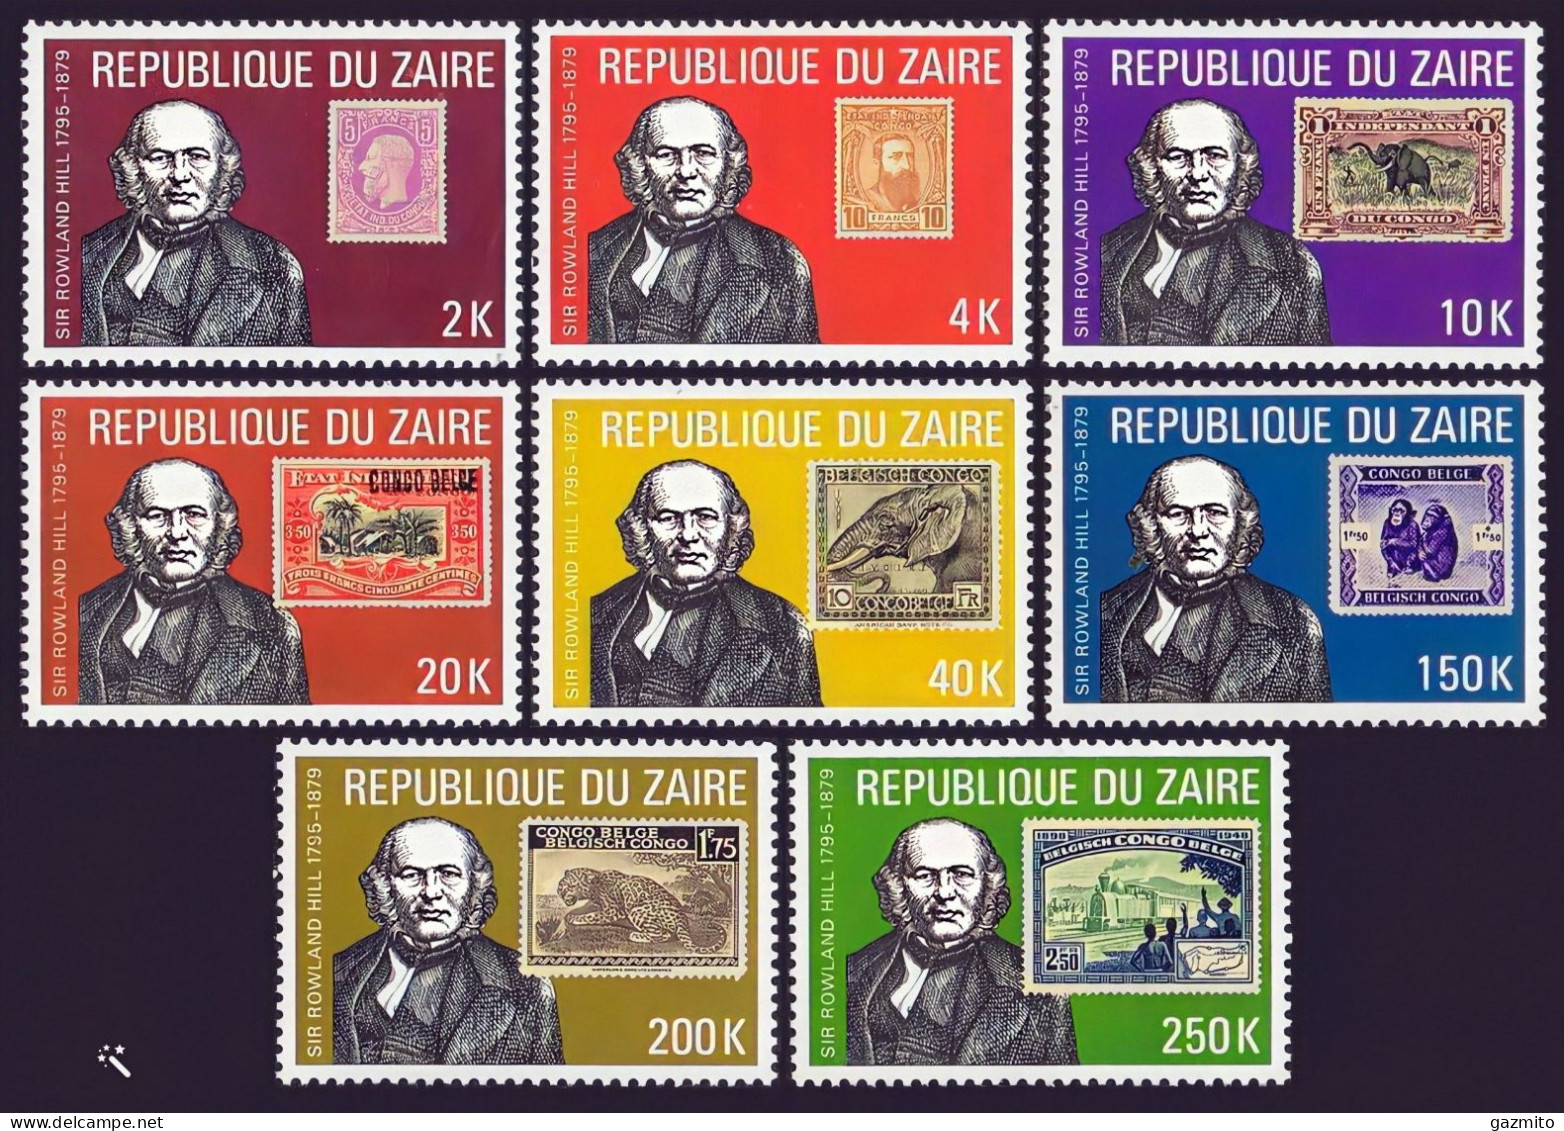 Zaire 1980, Rowland Hill, Stamp On Stamp, Wild Cat, Monkey, Elephant, 8val - Olifanten